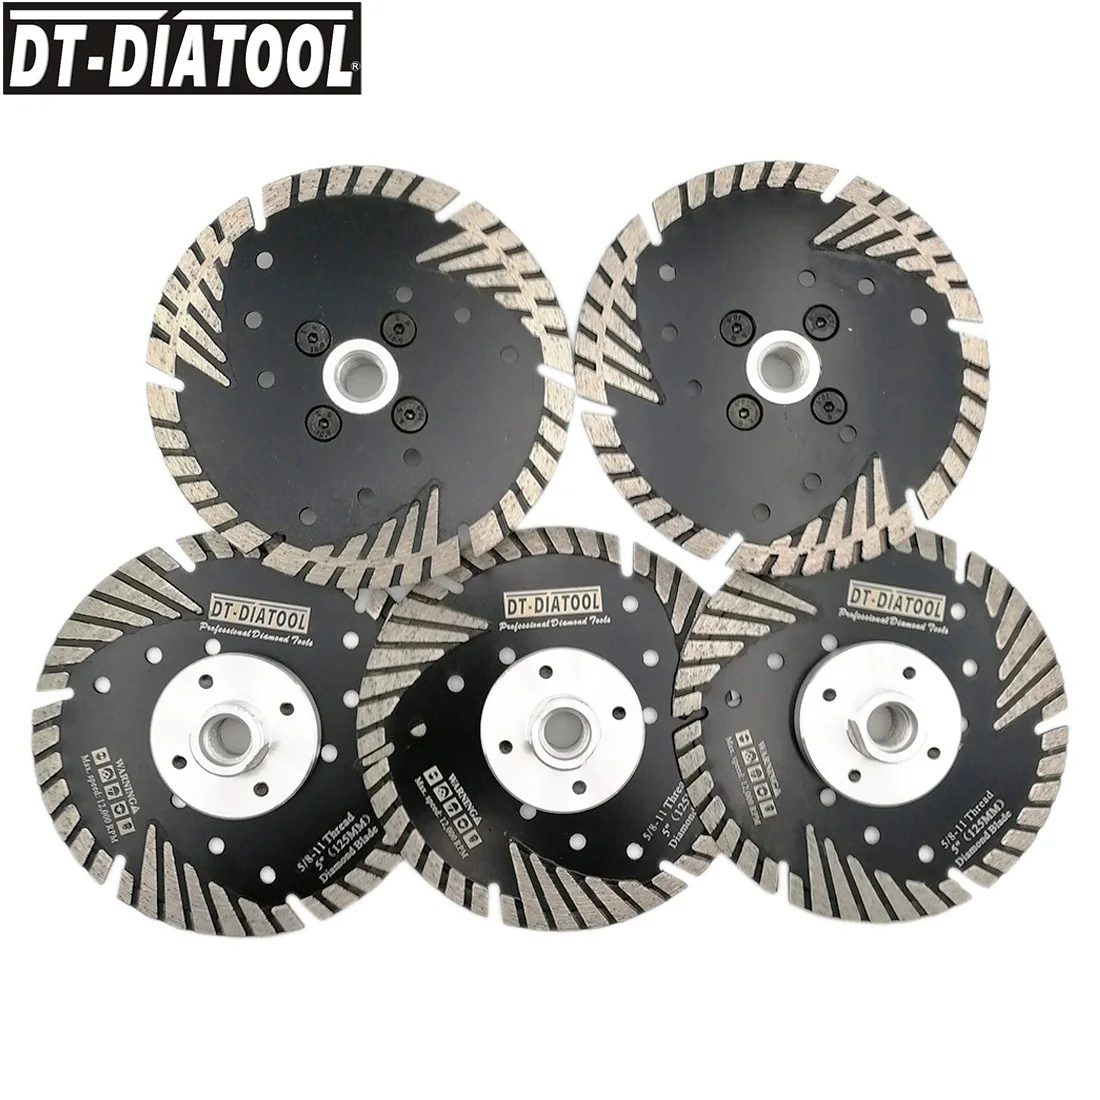 DT-DIATOOL 5pcs 125mm/5inch Professional Quality Hot Pressed Diamond Cutting Discs Turbo Blade For Concrete Brick 5/8-11 thread